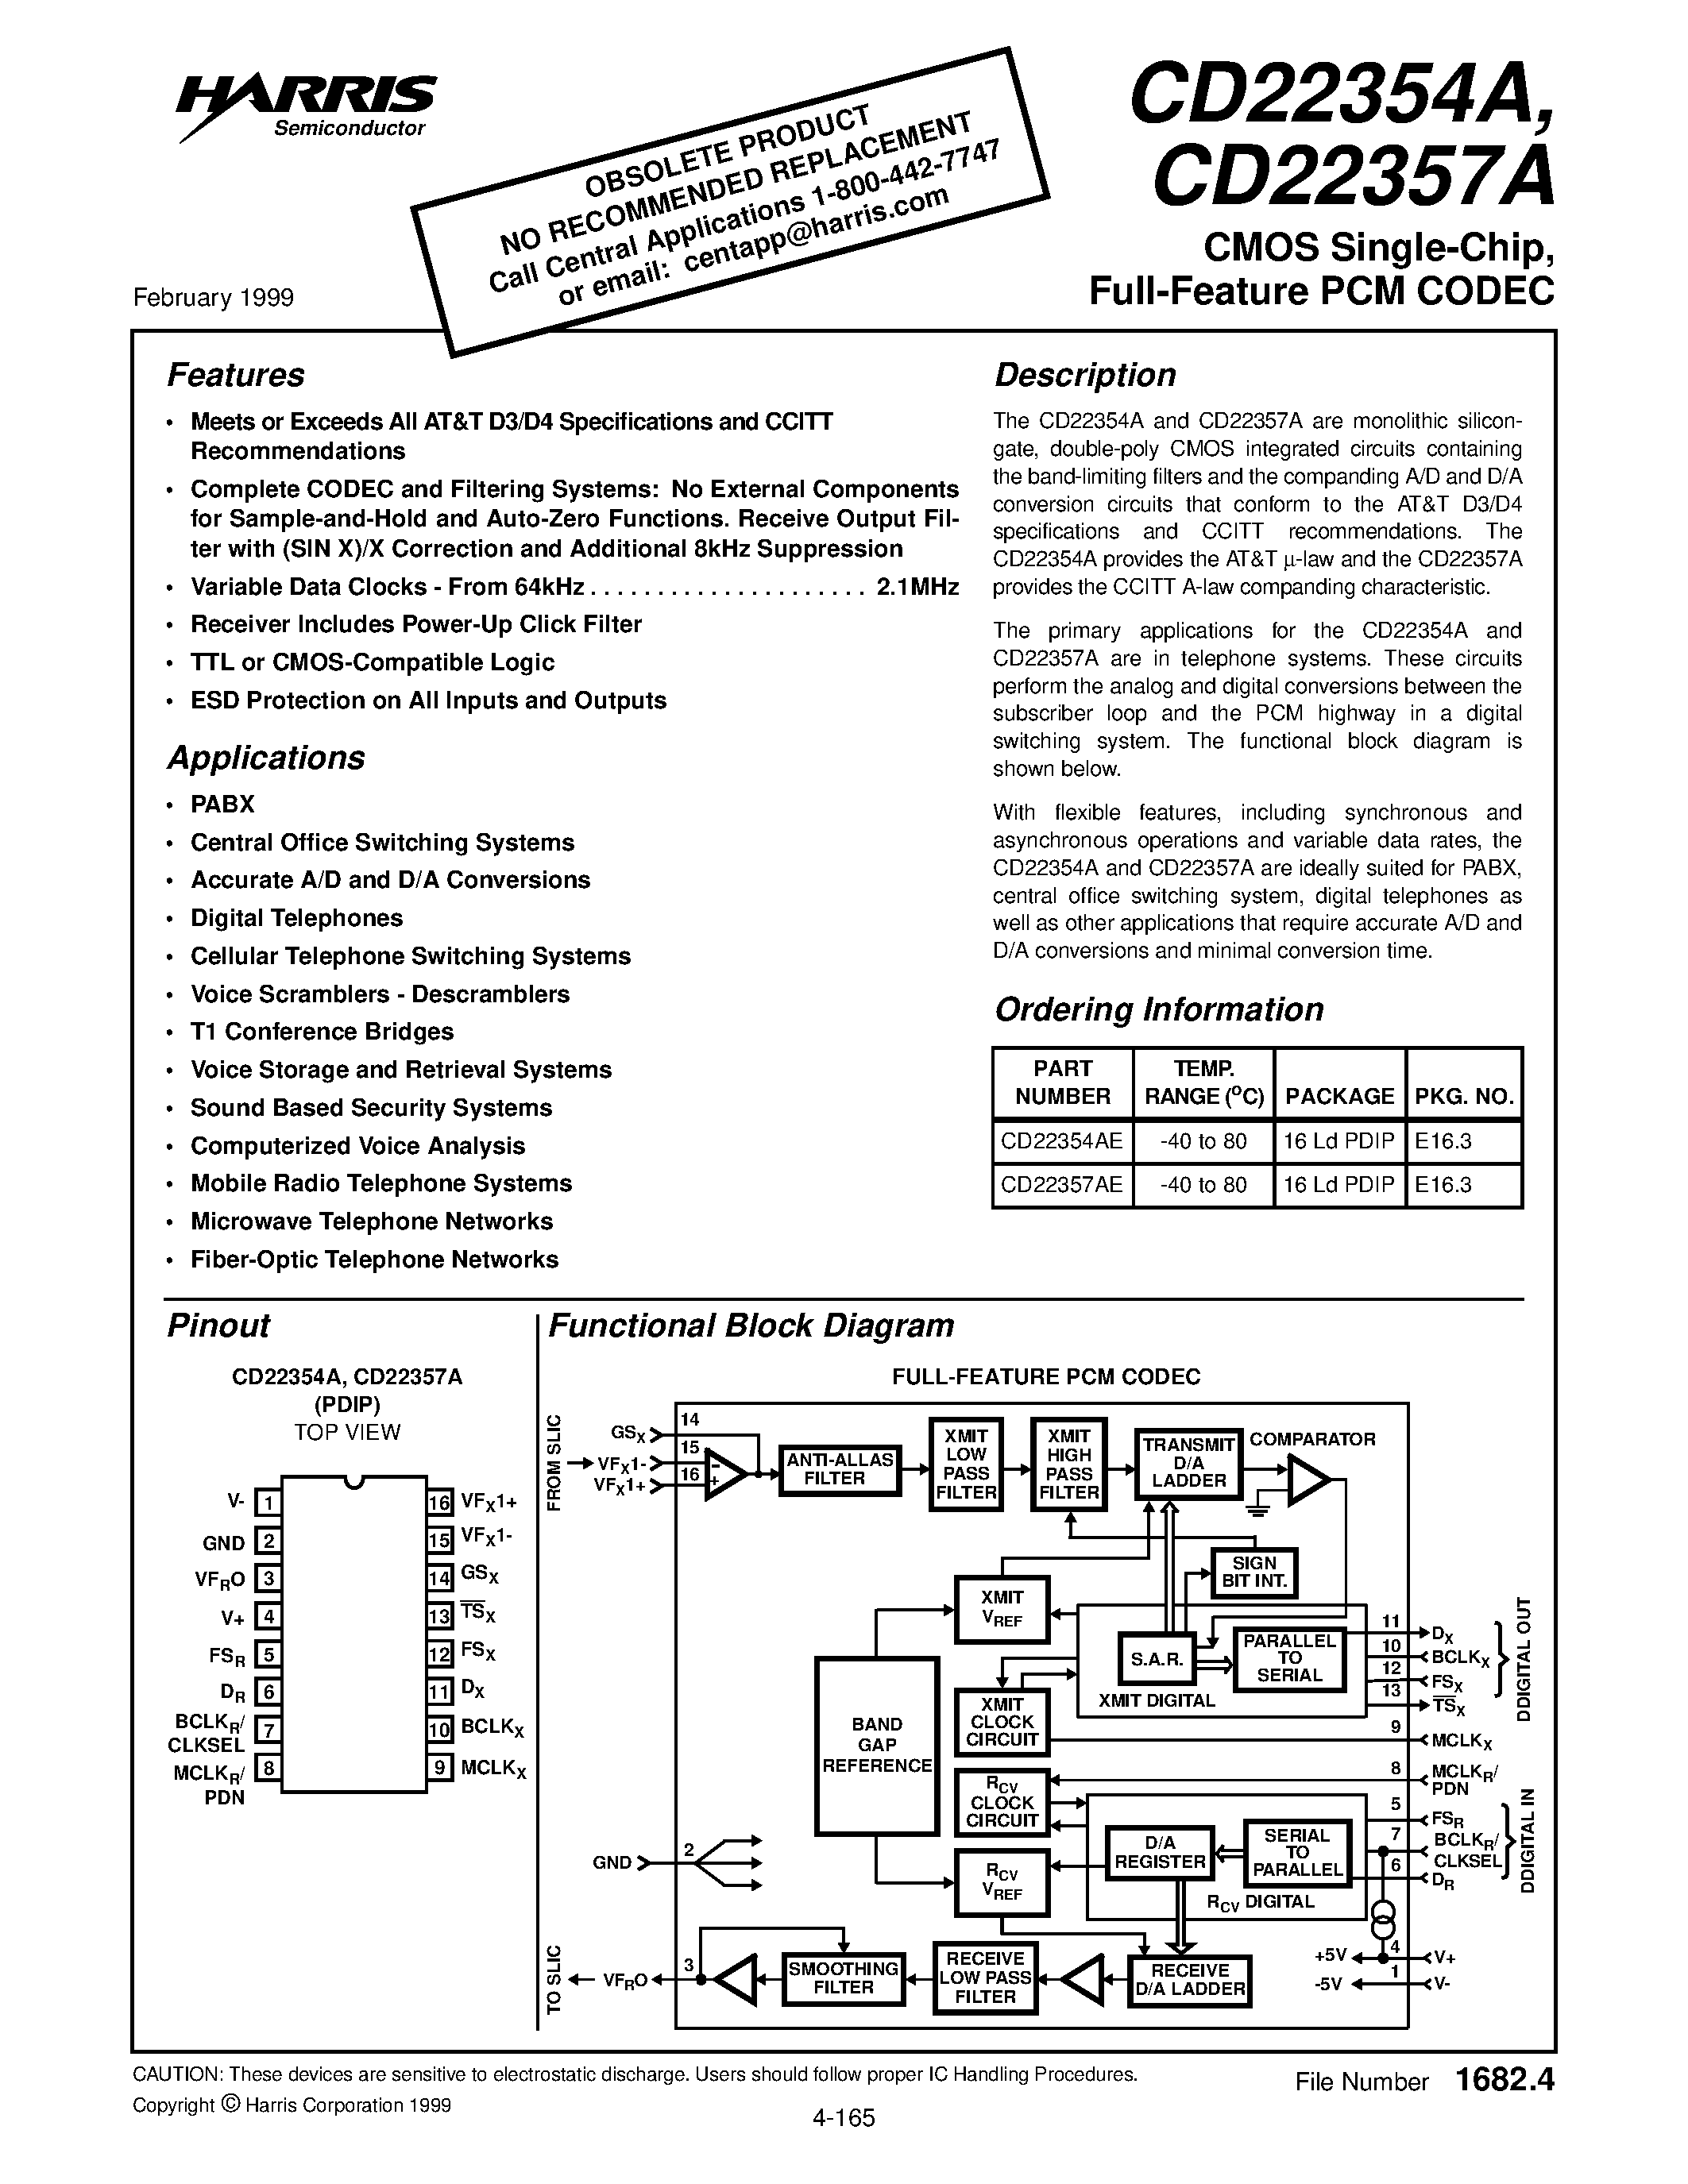 Даташит CD22354A - CMOS Single-Chip/ Full-Feature PCM CODEC страница 1